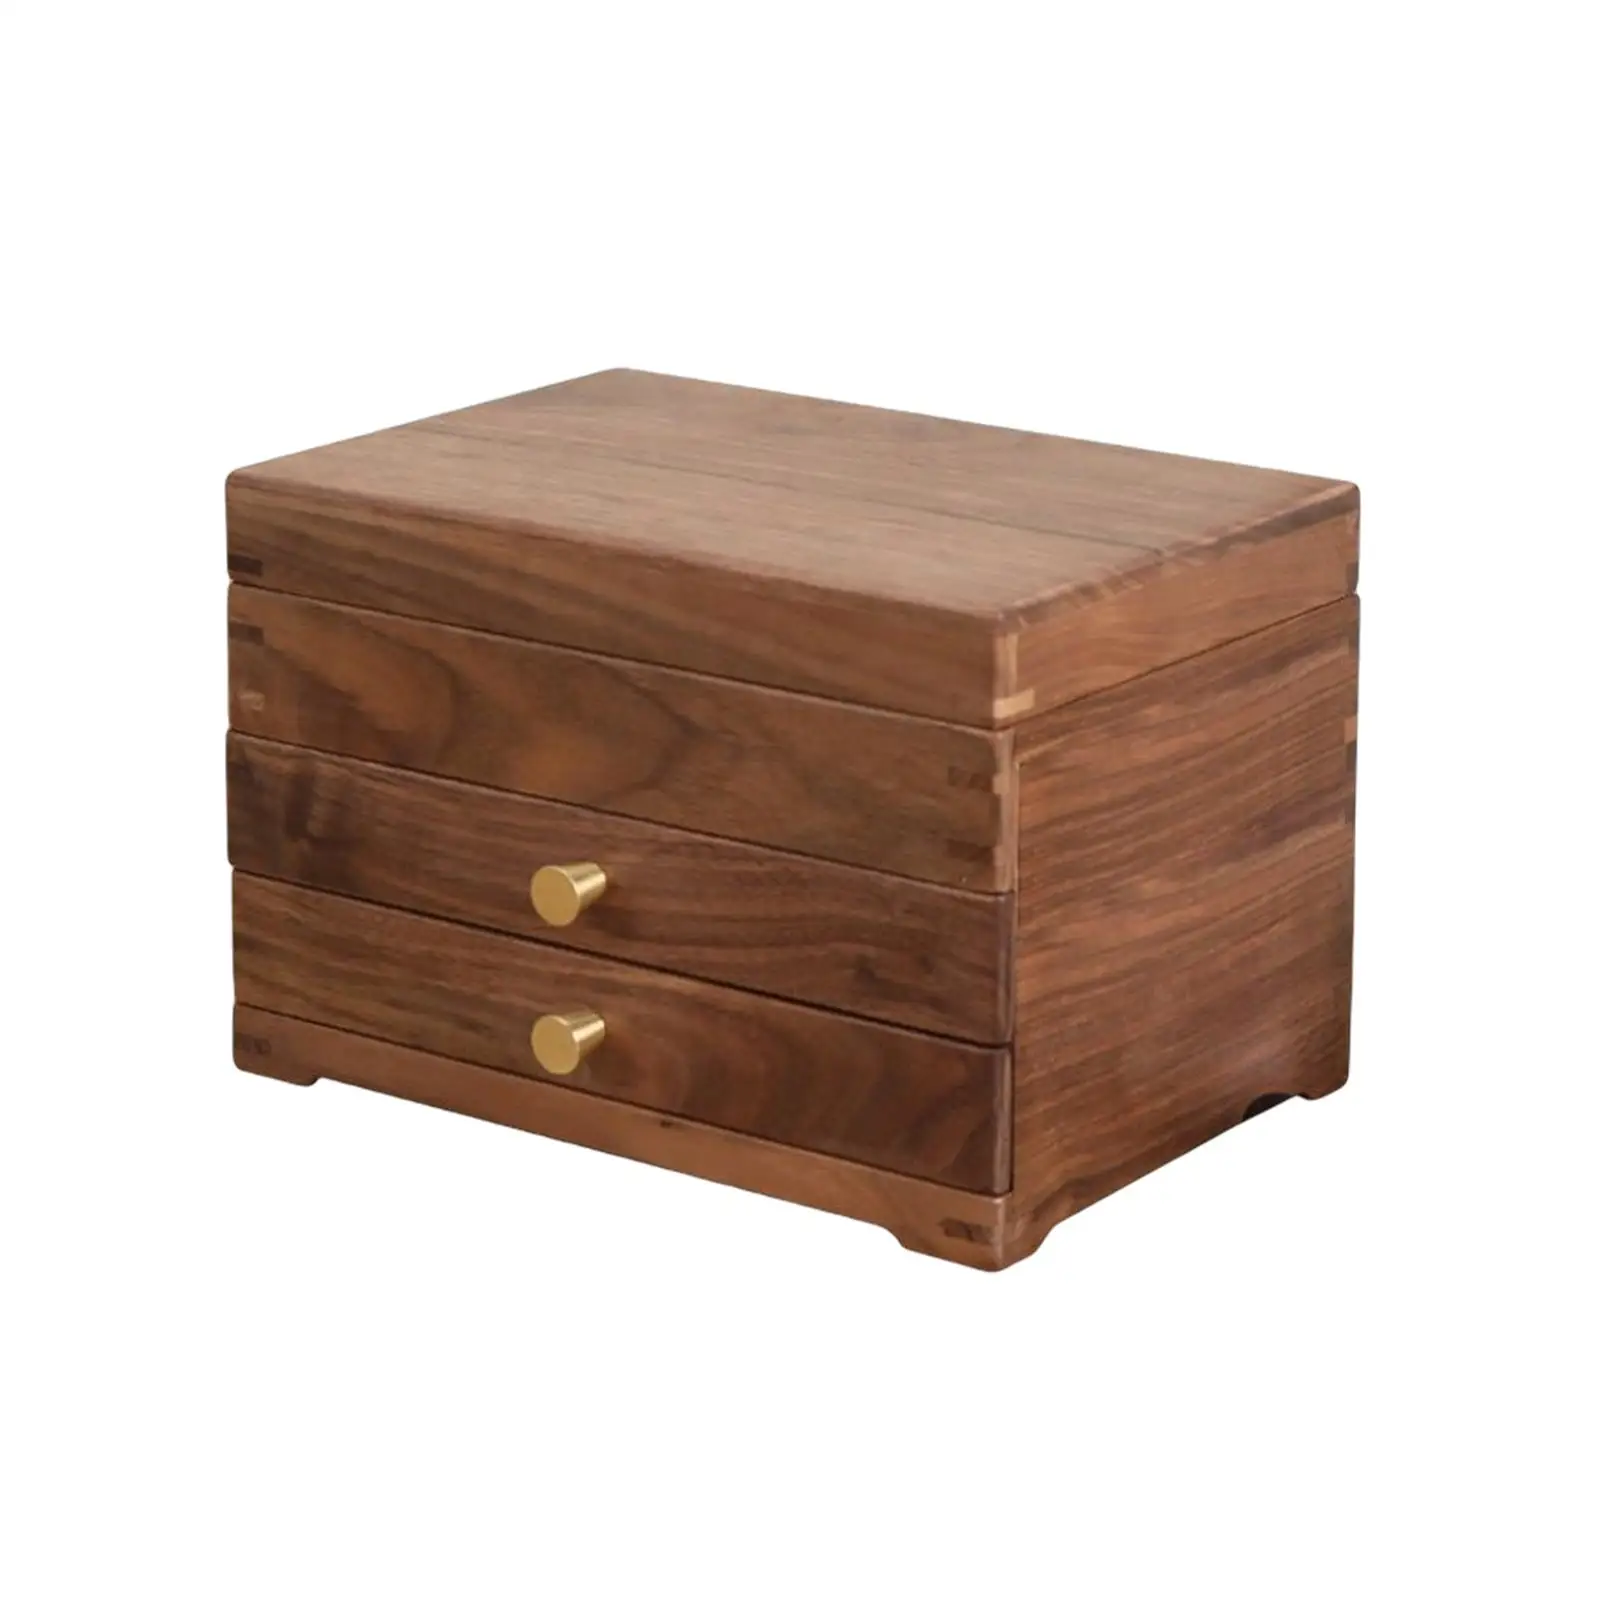 Wooden Jewelry Storage Box Protective Case Rings Holder Large Capacity keepsake box Layers for Keepsakes